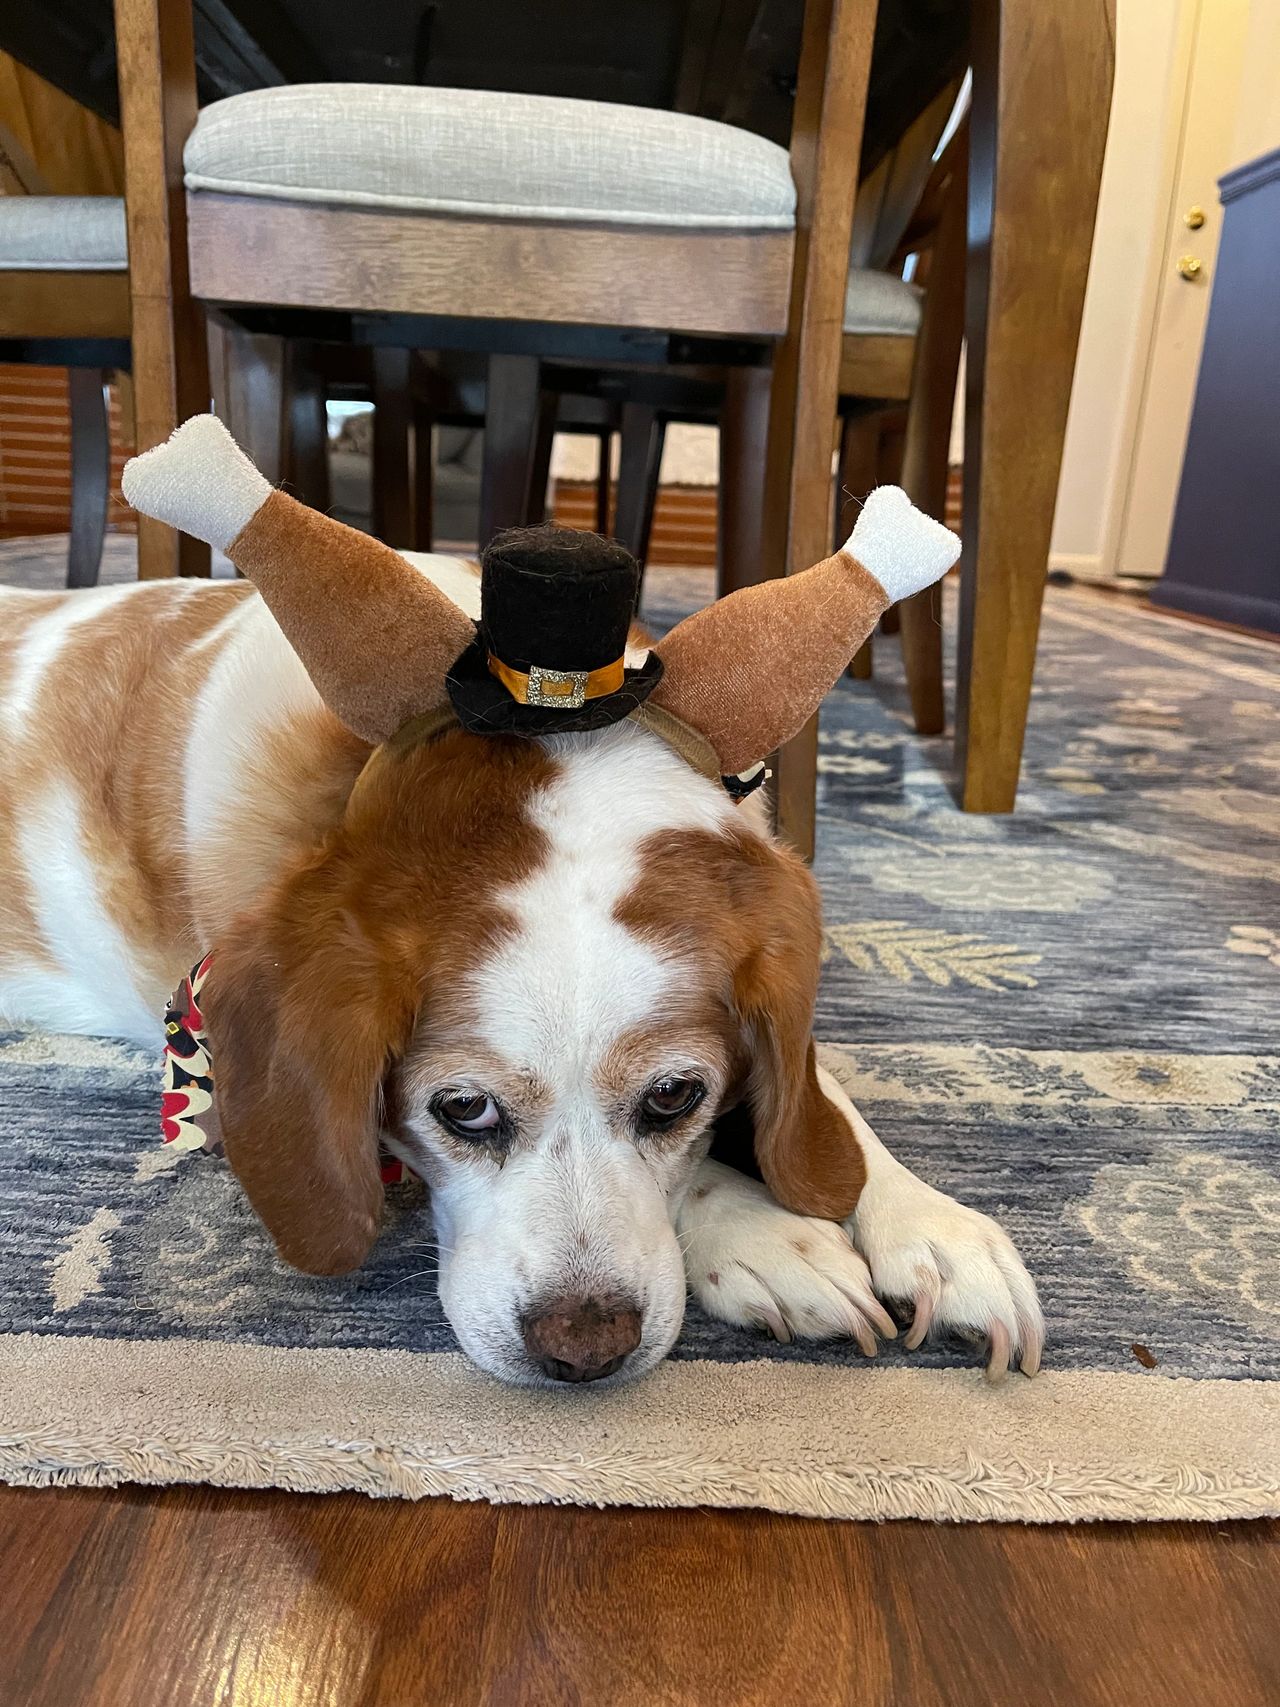 Old dog in turkey leg hat